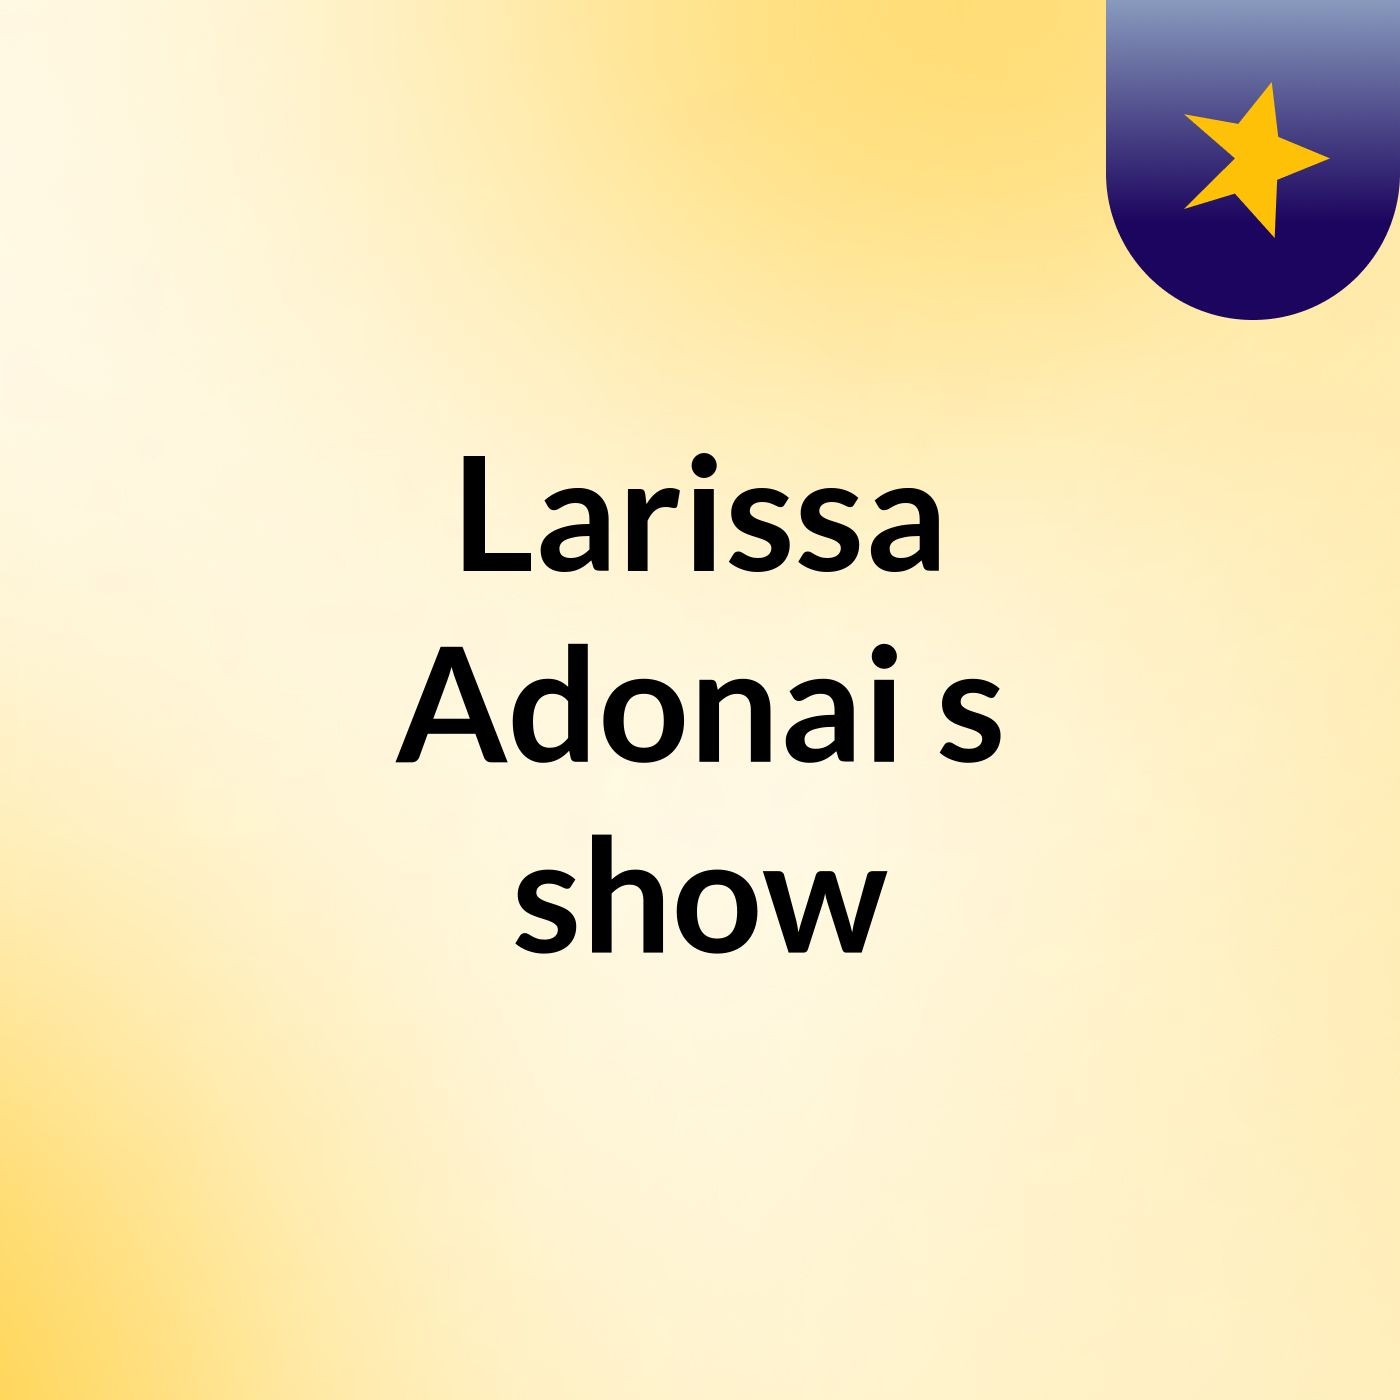 Larissa Adonai's show